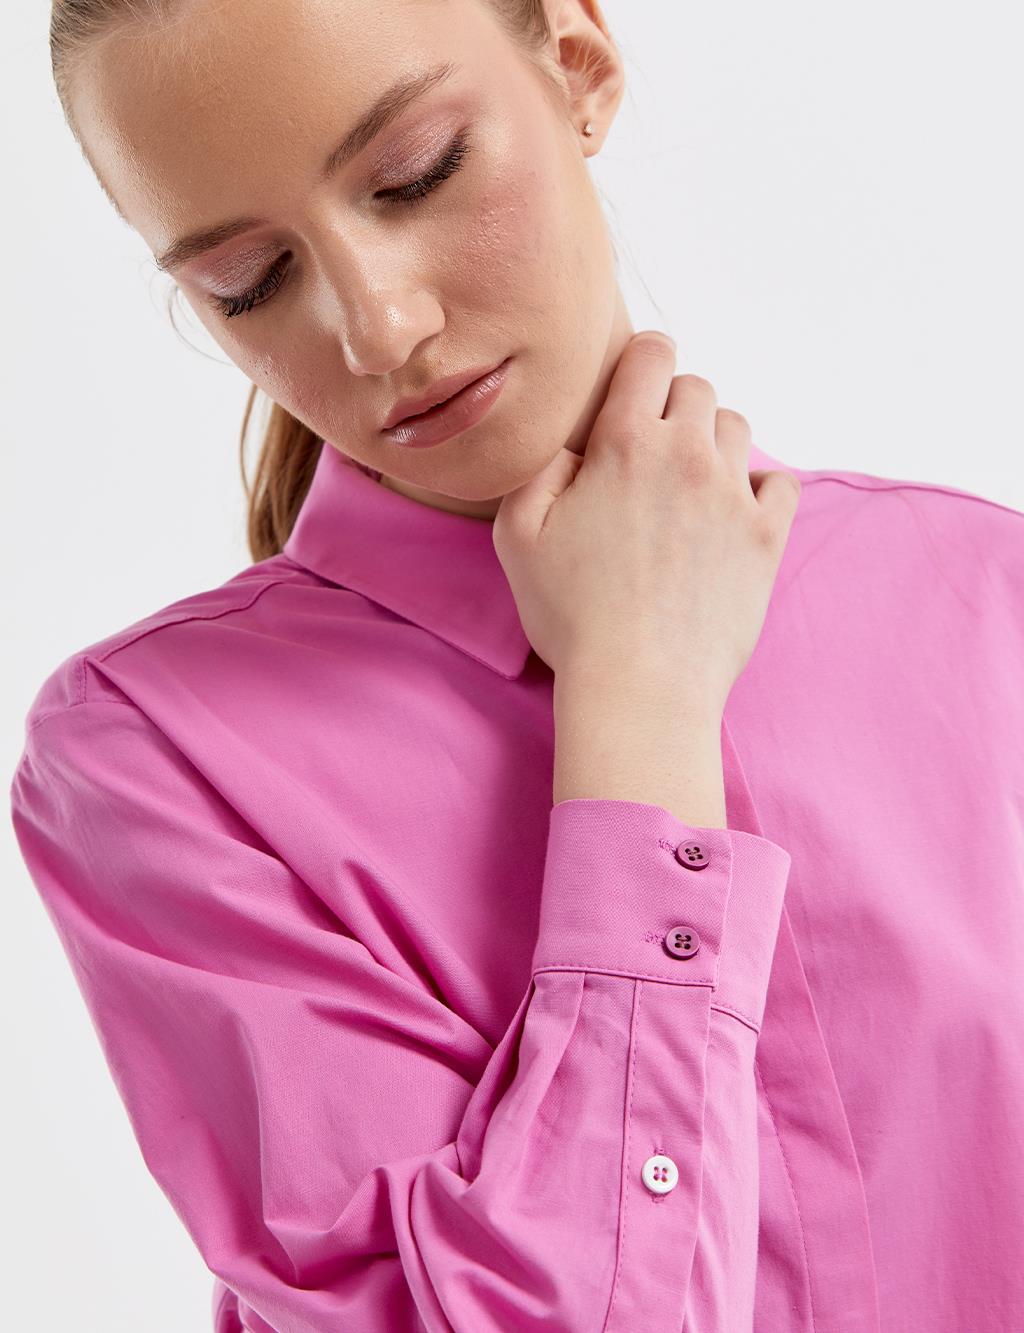 Asymmetrical Cut Poplin Shirt Candy Pink